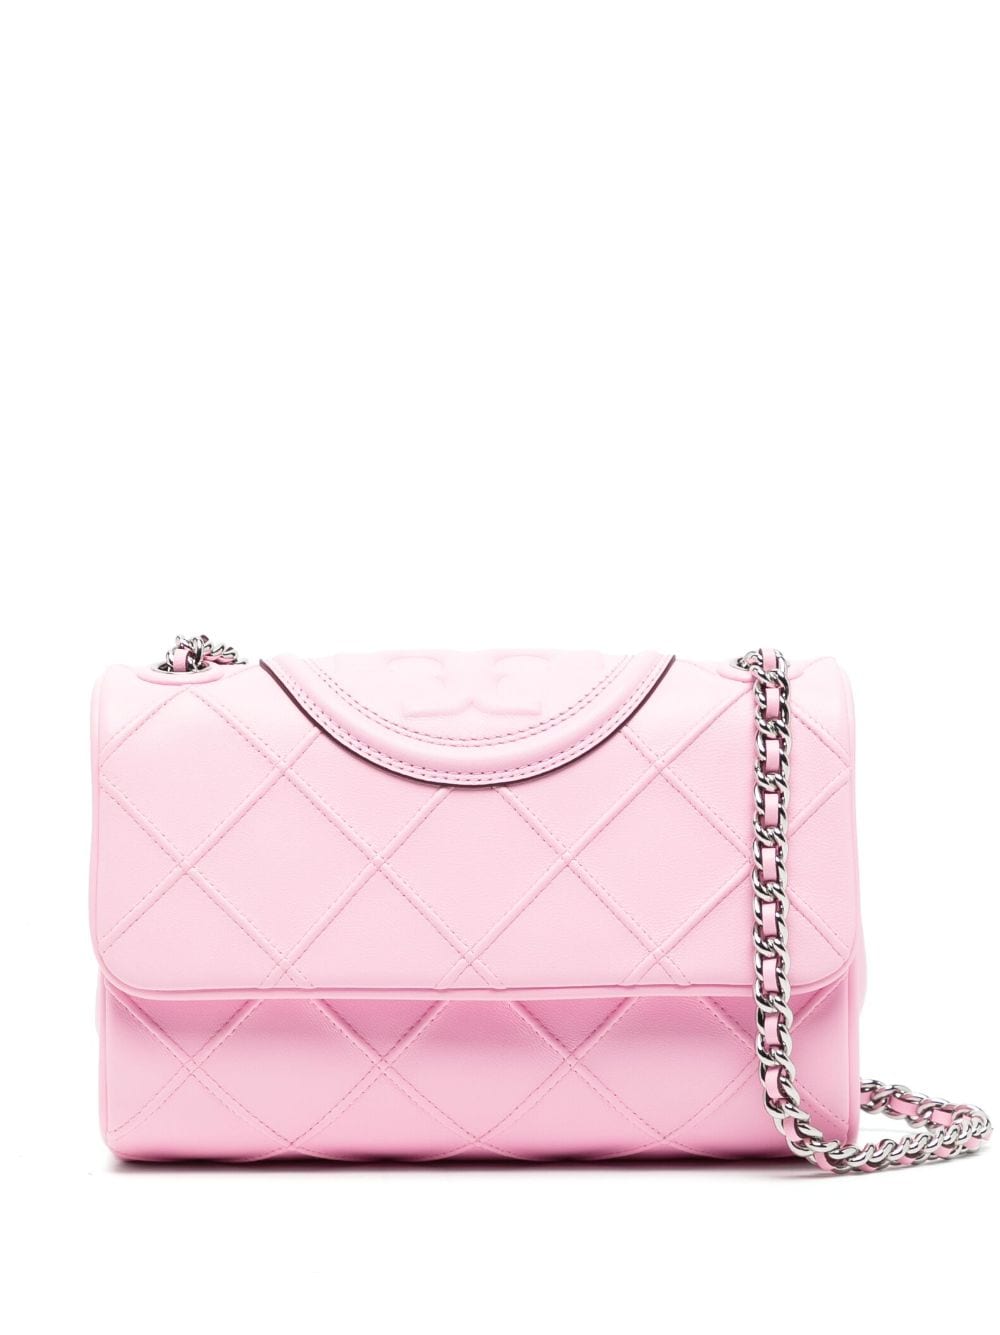 Tory Burch Blush Pink Leather Medium Fleming Shoulder Bag